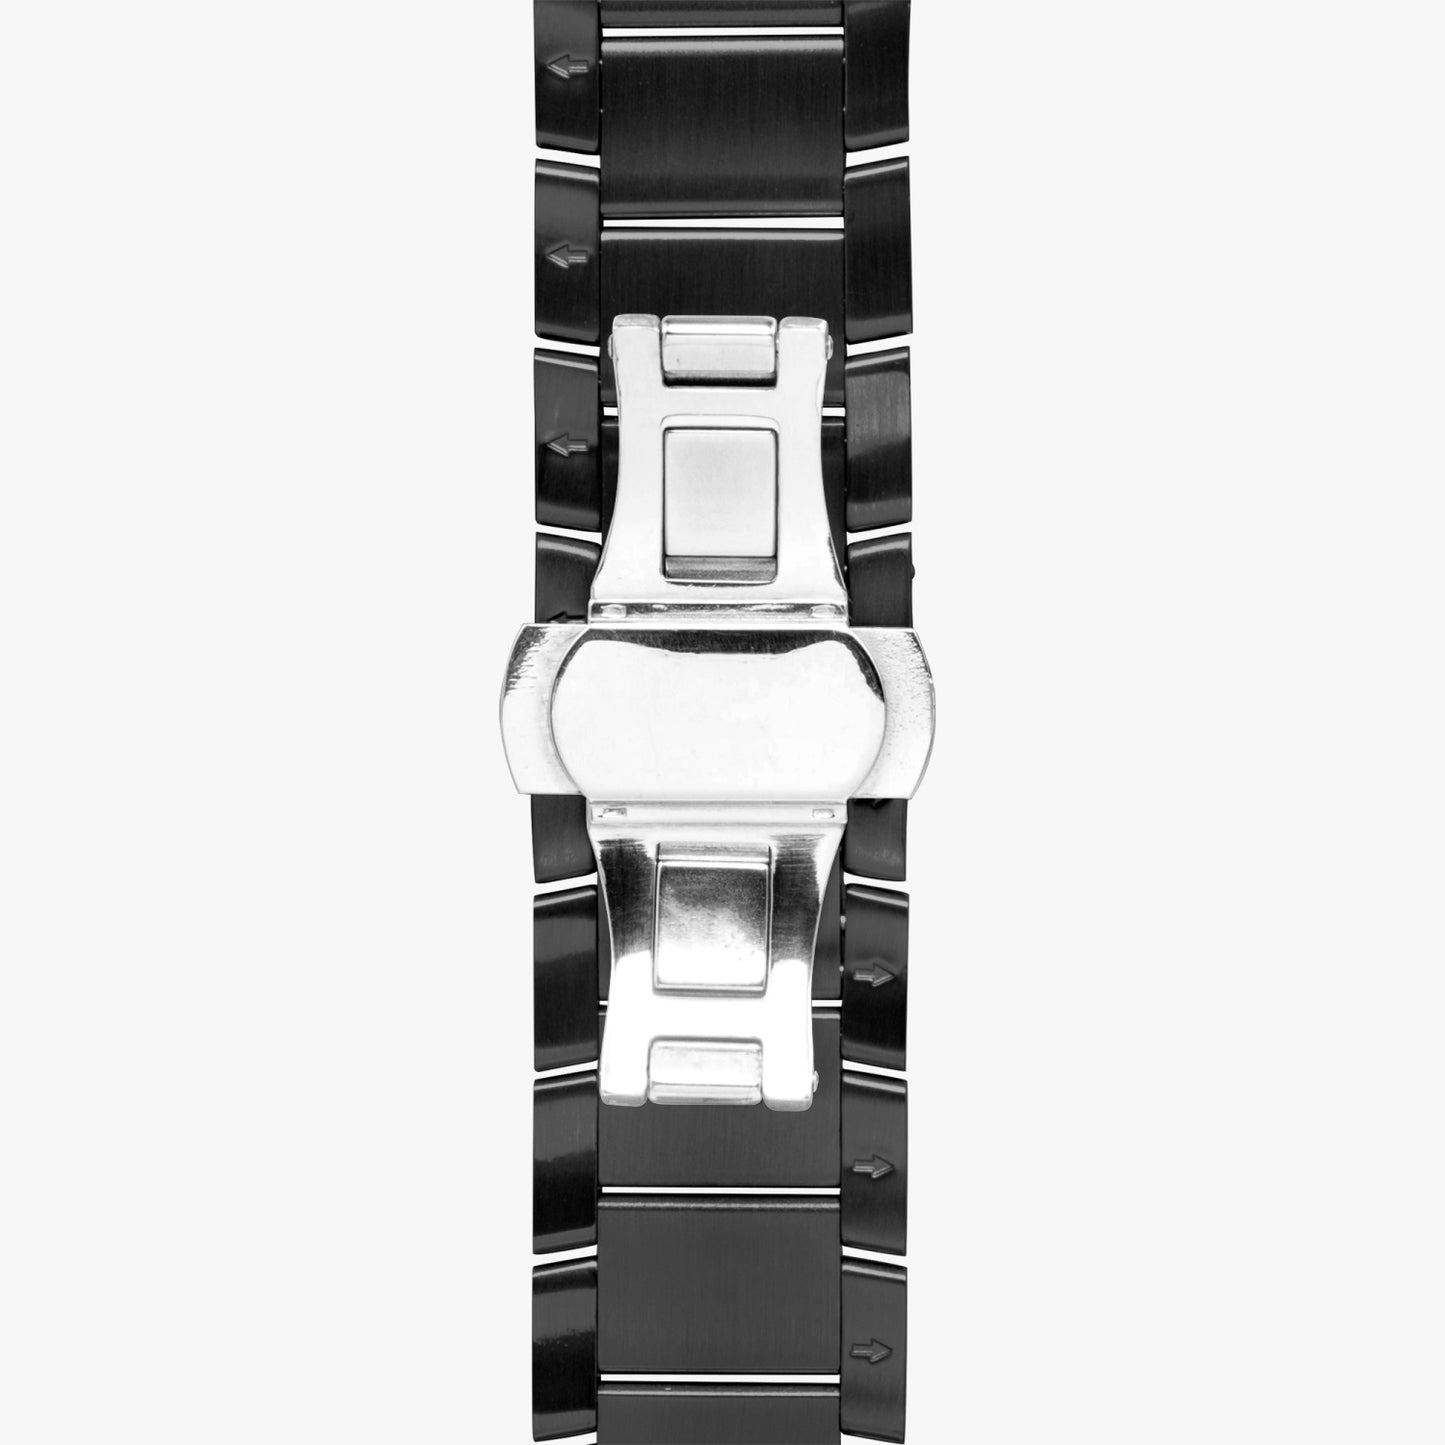 Automatic watch steel bracelet "Toujoublé" (without indicators) 